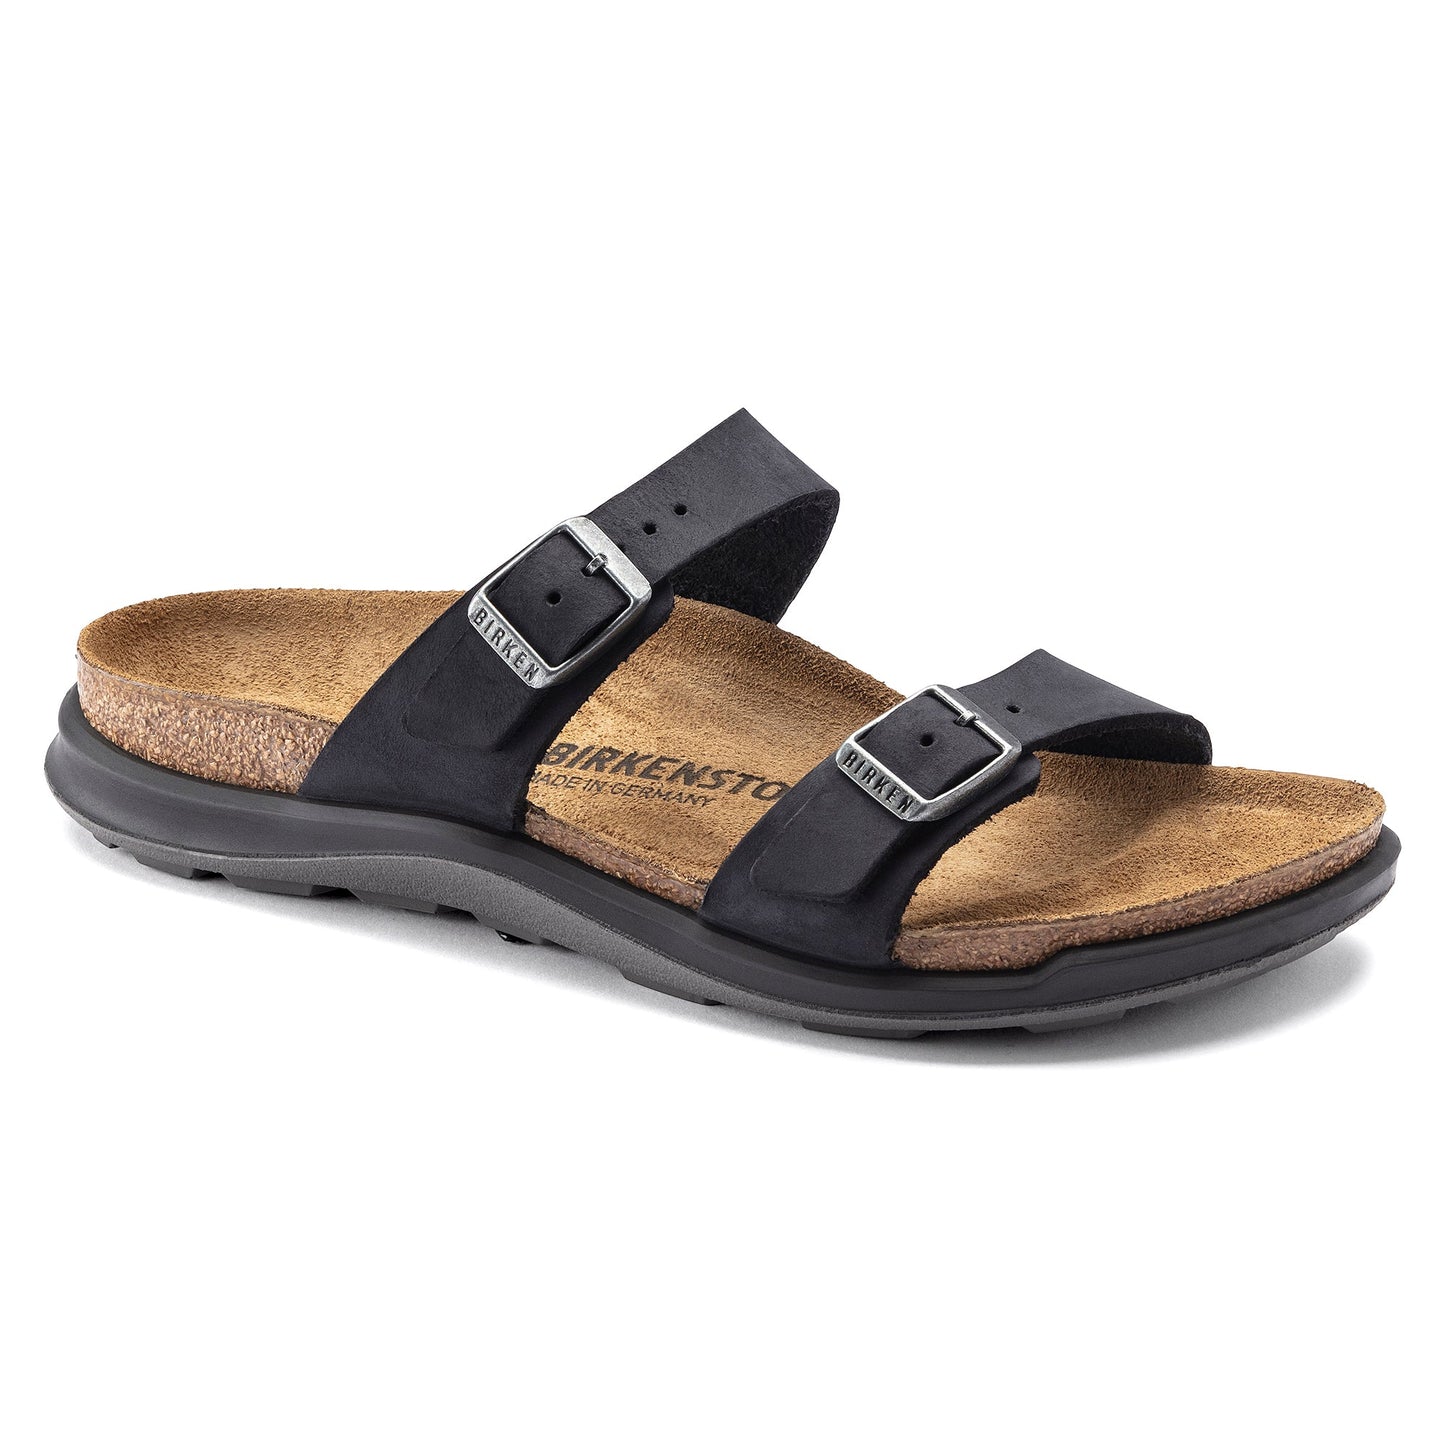 Sierra | Oiled Leather | Black - Sandals - Birkenstock